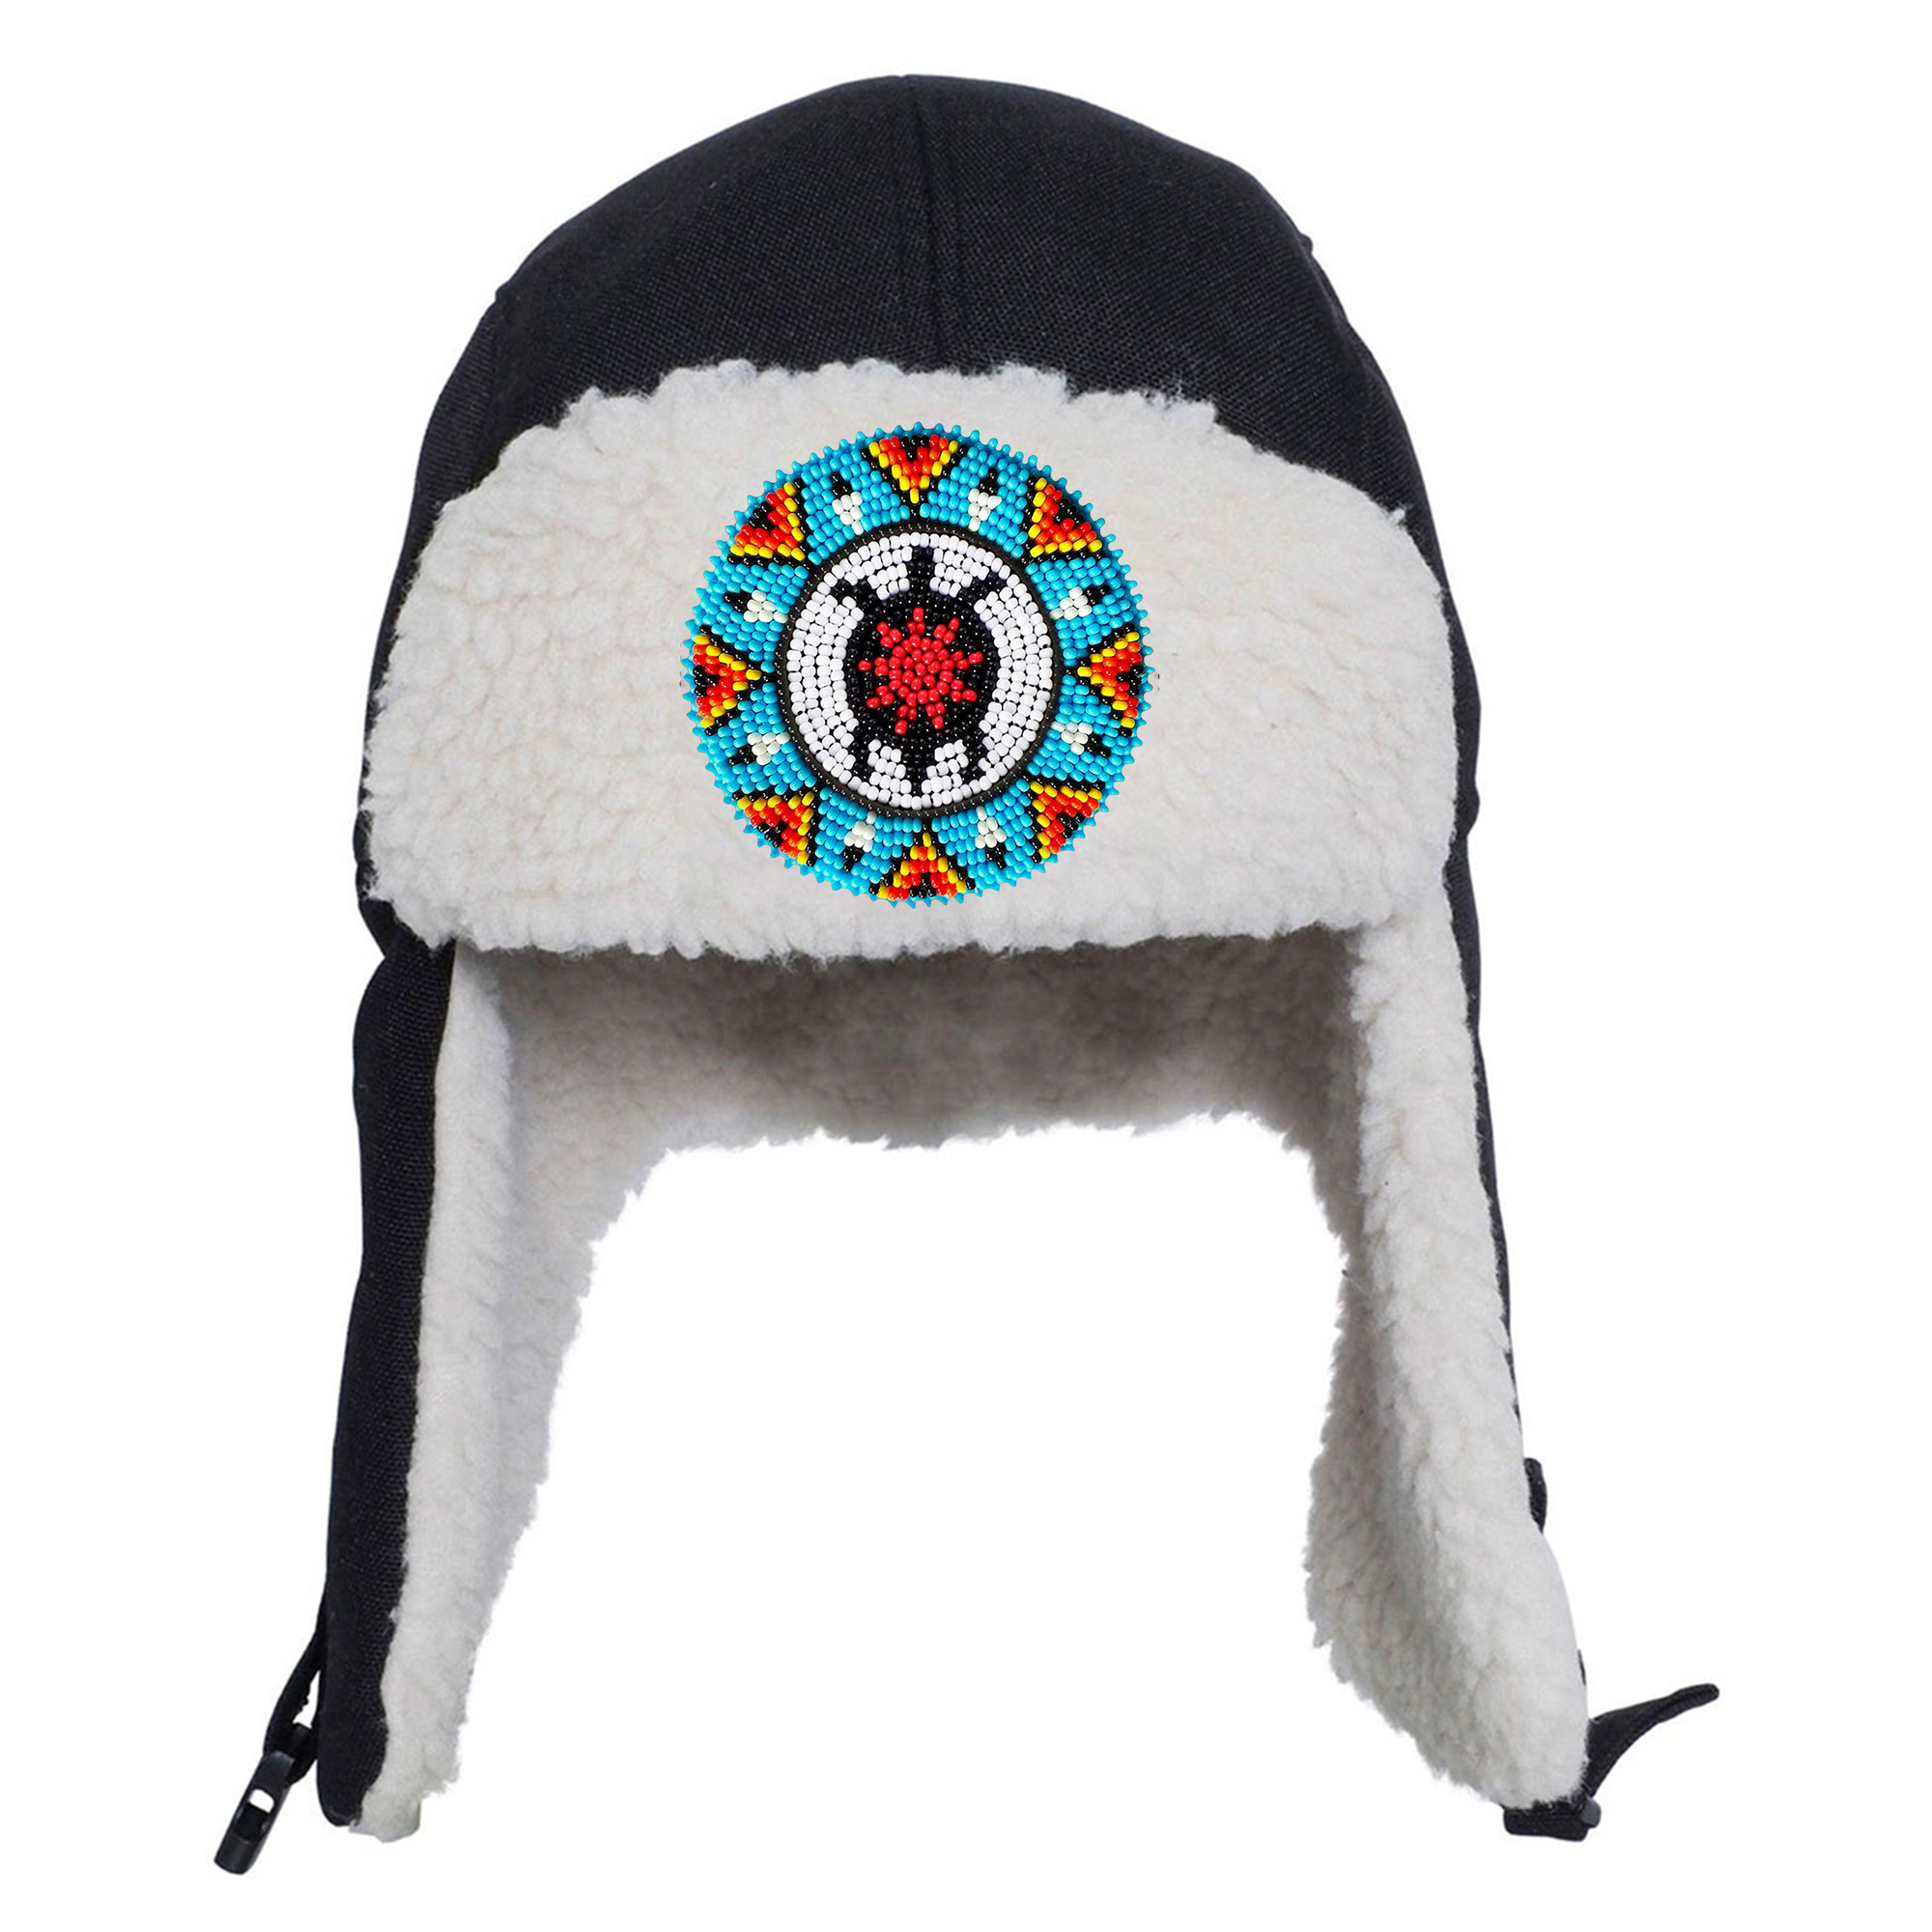 SALE 50% OFF - Blue Turtle Beaded Winter Trapper Hats for Men Women Native American Style